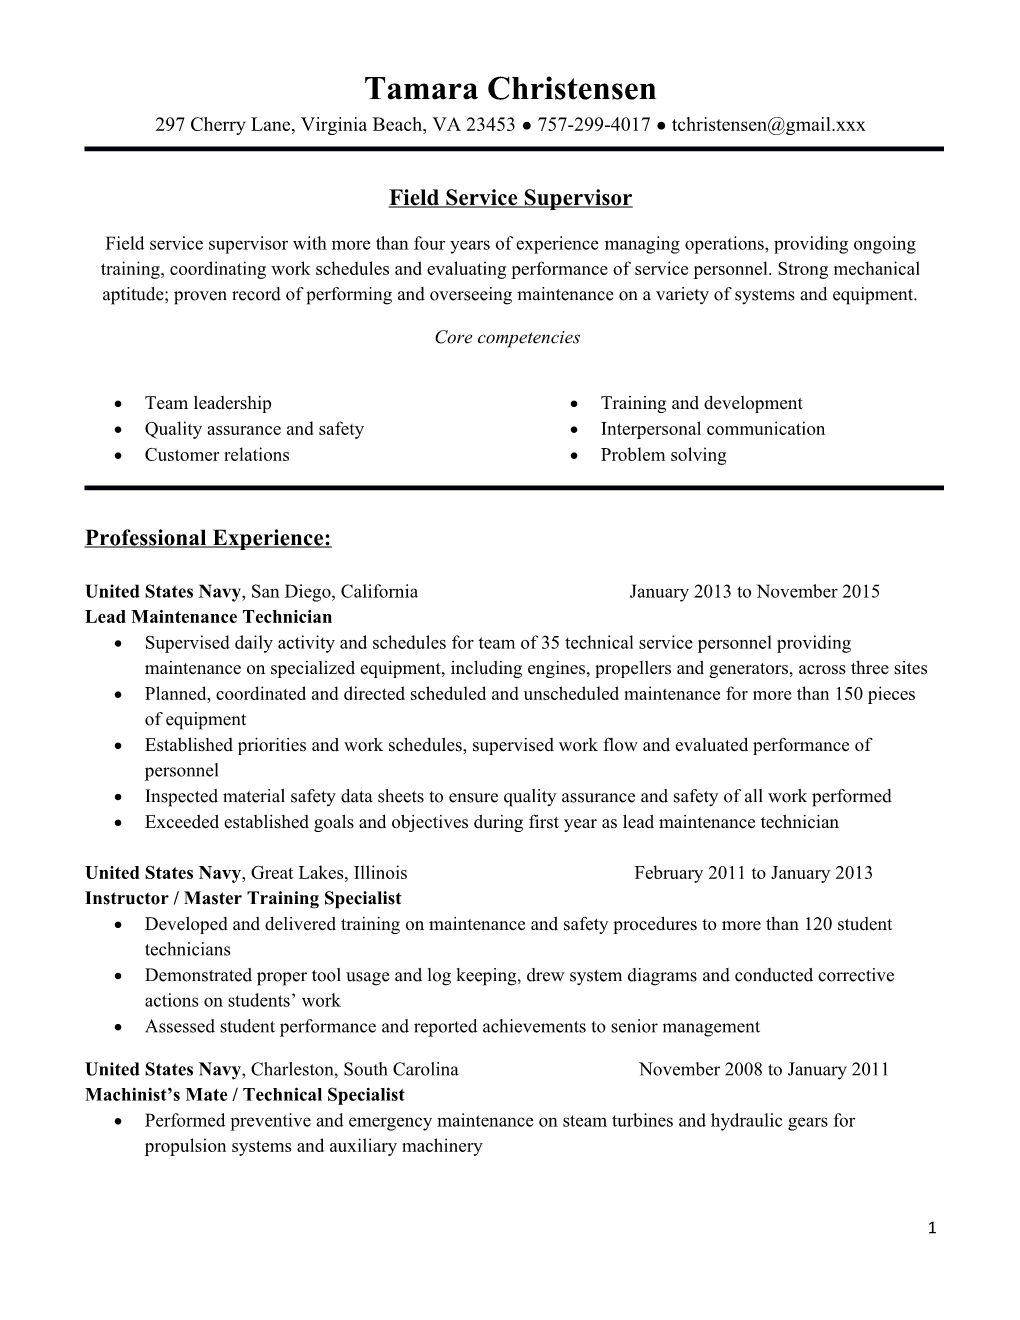 Field Service Supervisor Resume Sample